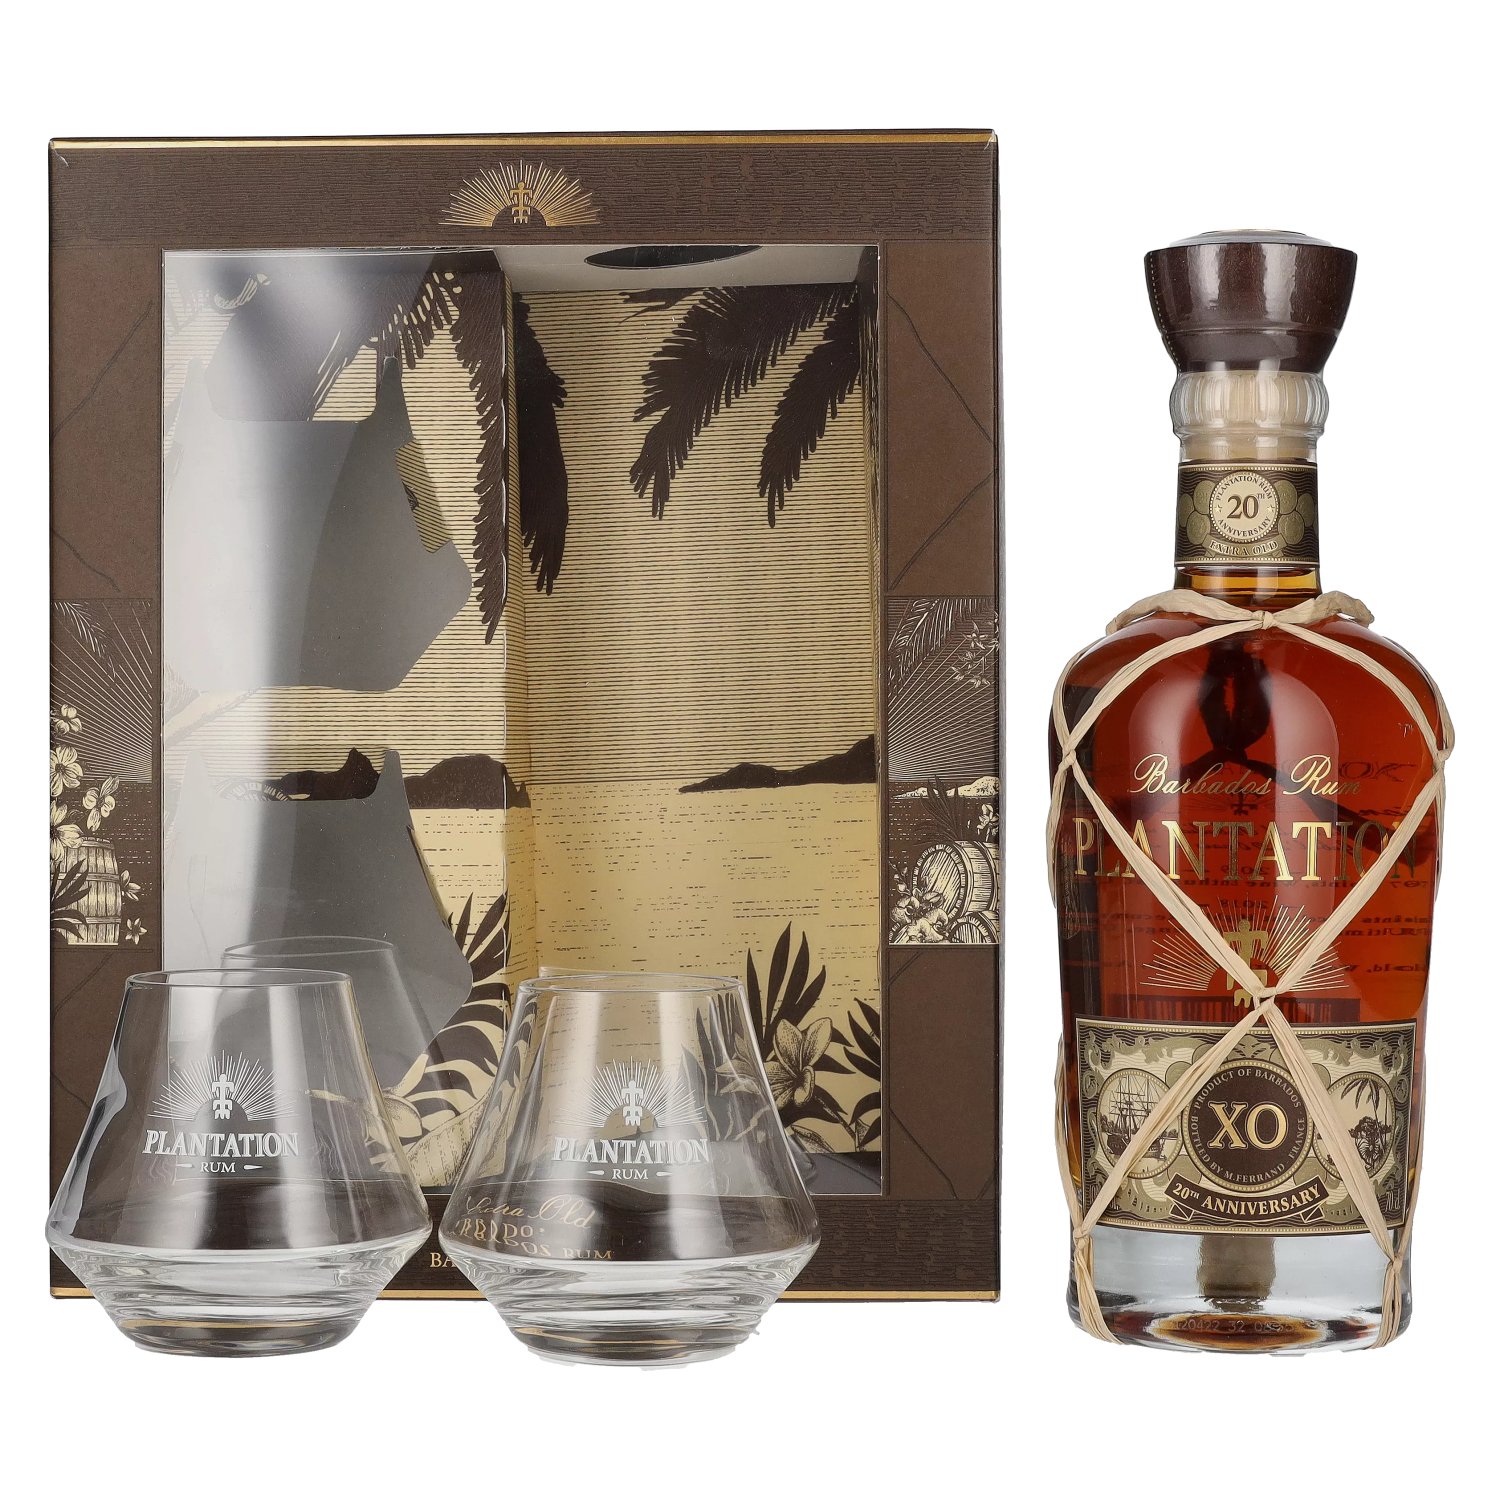 Plantation Rum BARBADOS XO 20th Anniversary 40% Vol. 0,7l in Giftbox with 2  glasses